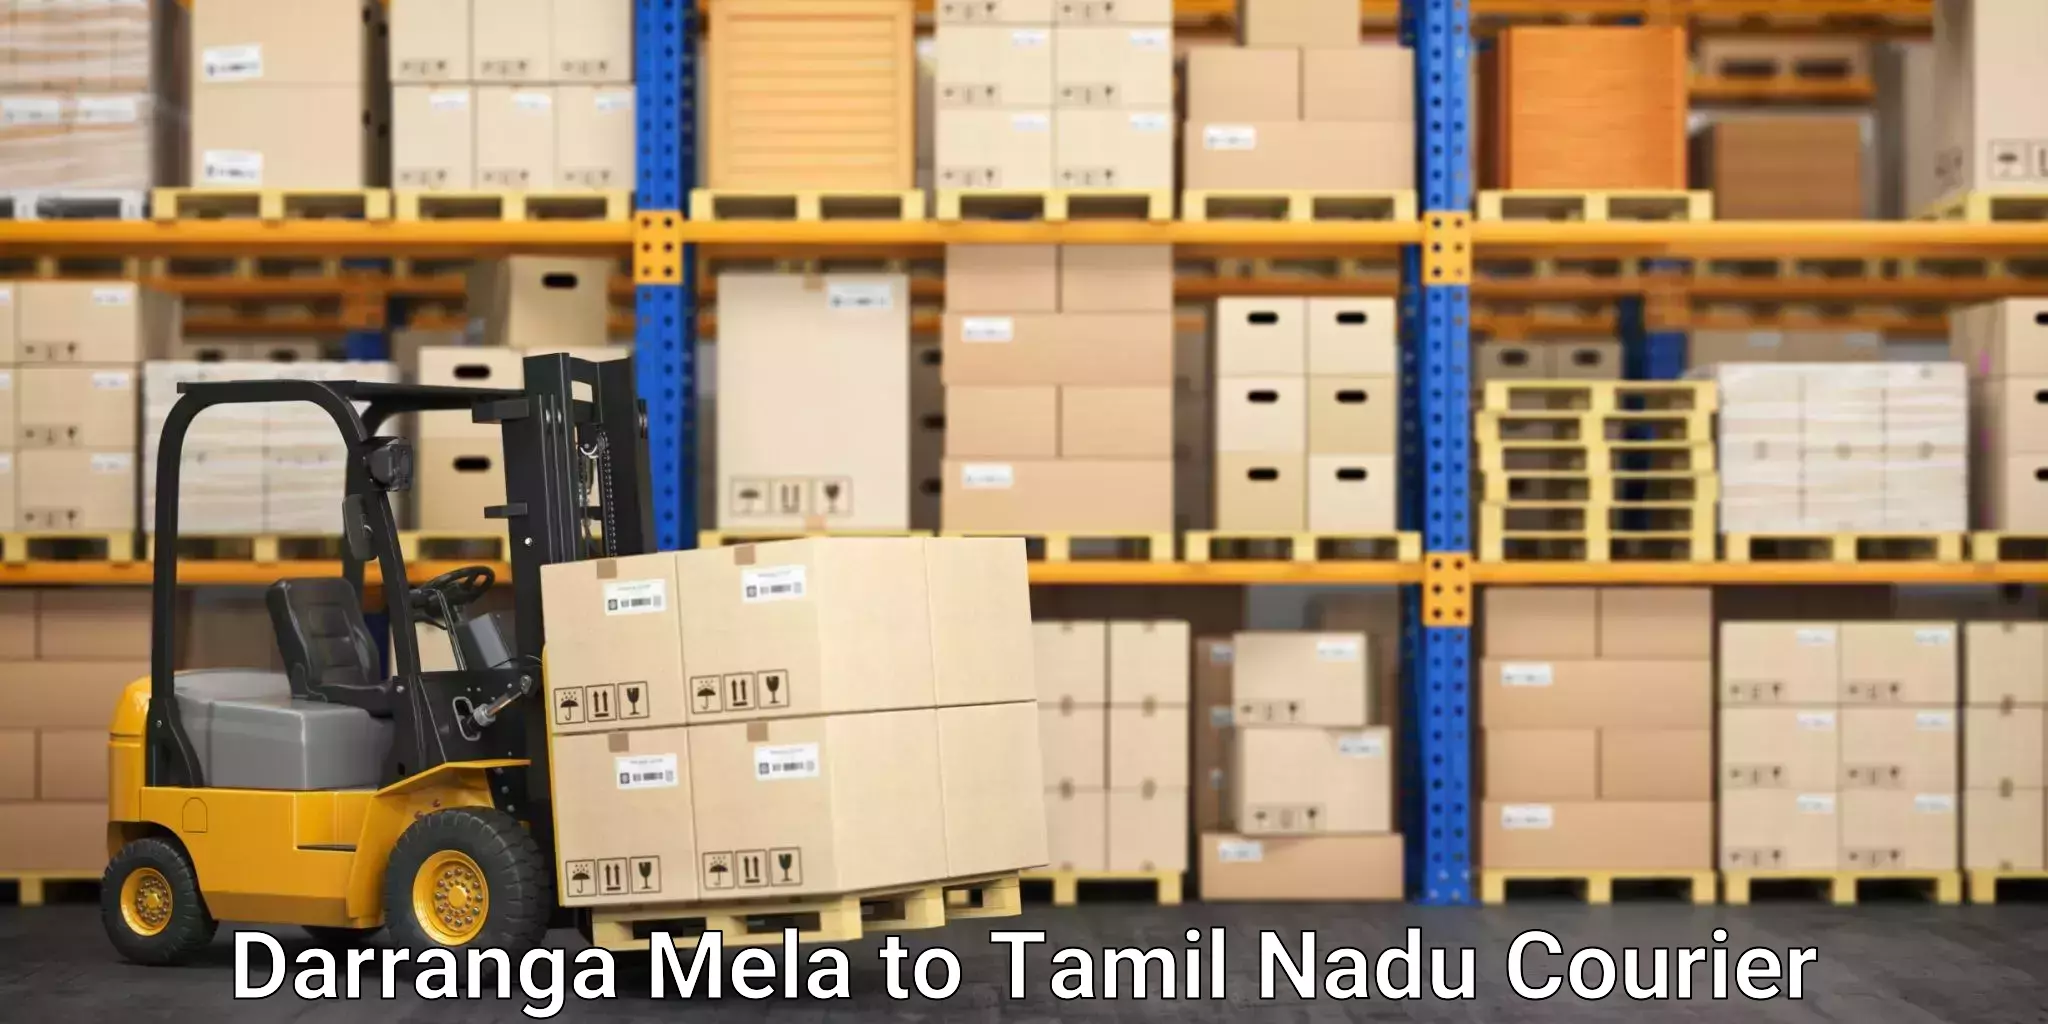 Logistics solutions in Darranga Mela to Tamil Nadu